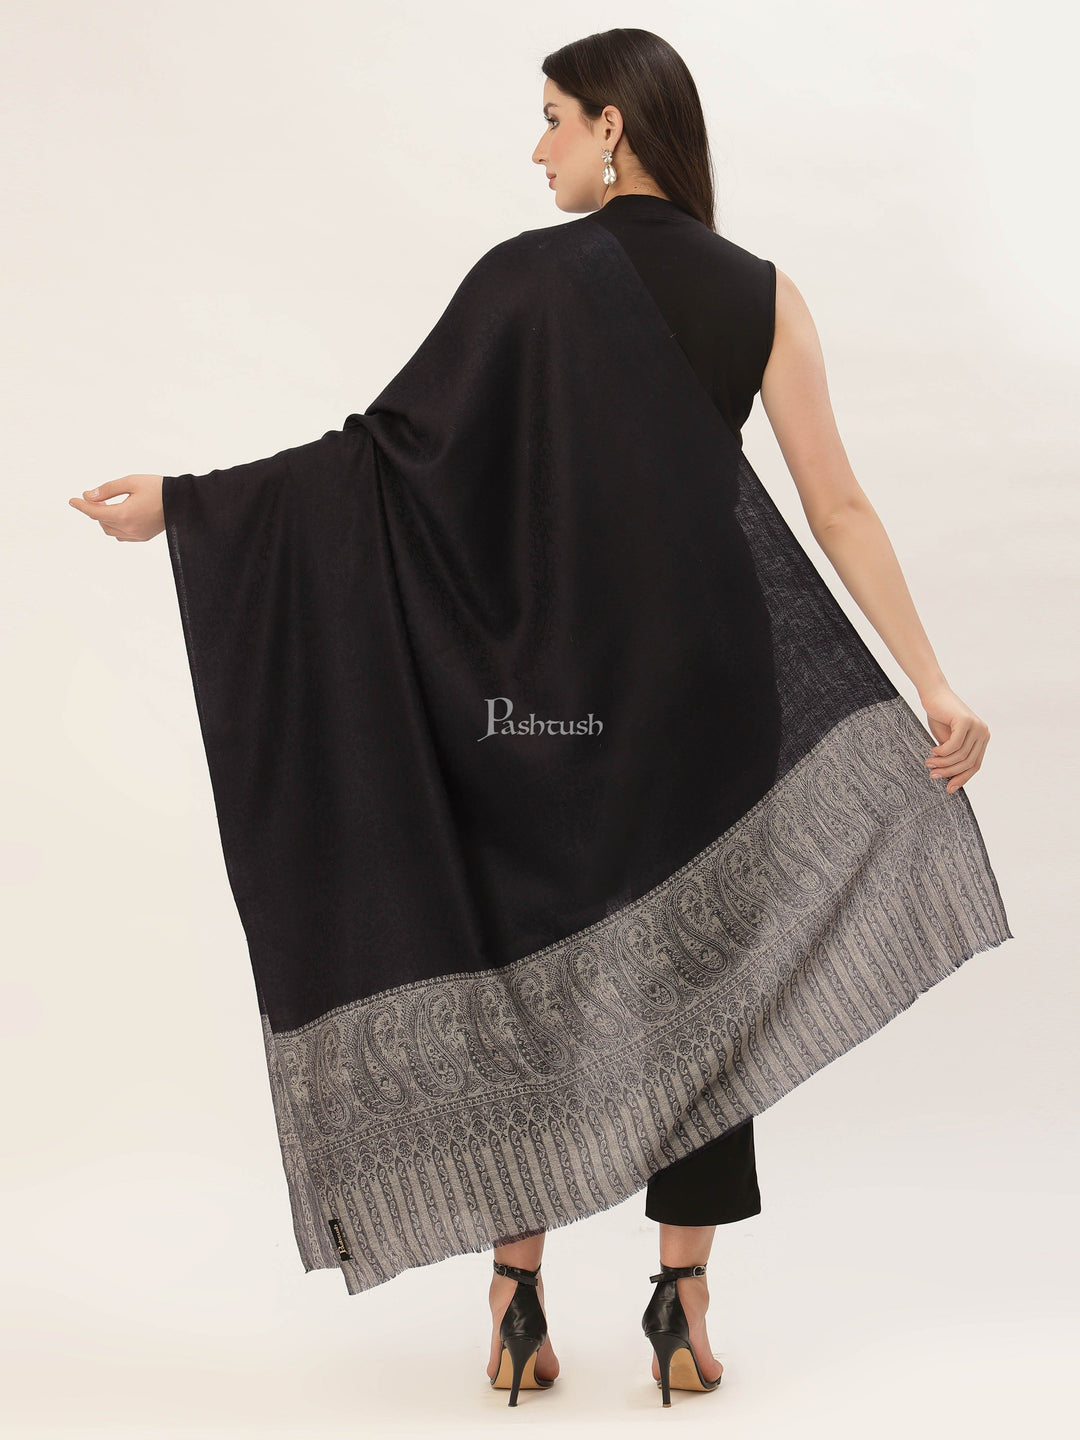 Pashtush India Womens Shawls Pashtush Womens Fine Wool Shawl, Black